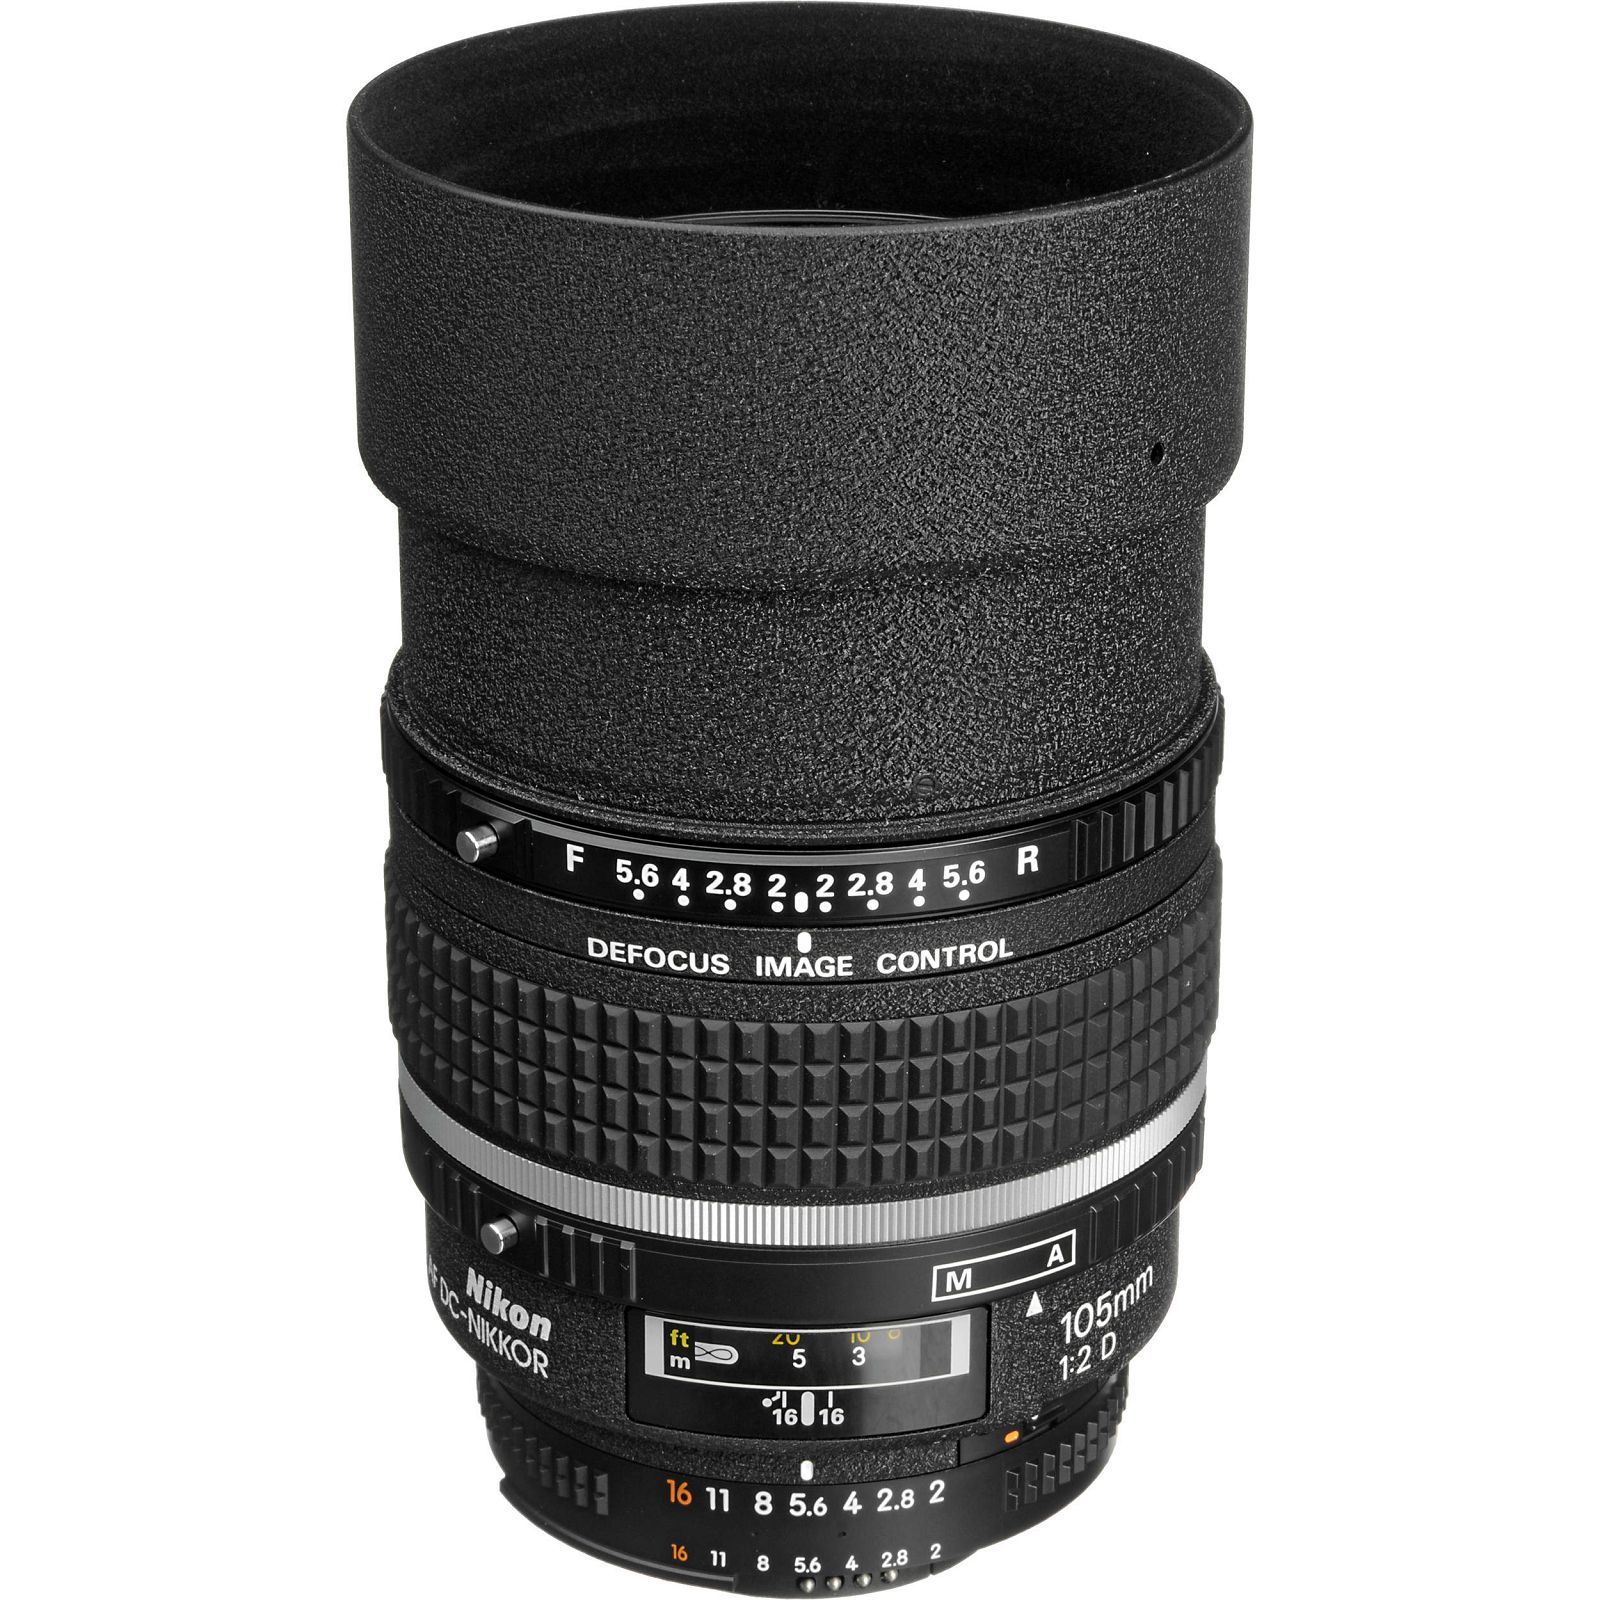 Nikon AF DC 105mm f/2D FX Portretni telefoto objektiv fiksne žarišne duljine Nikkor auto focus prime lens 105 f/2.0 F2D f/2 D (JAA327DA)